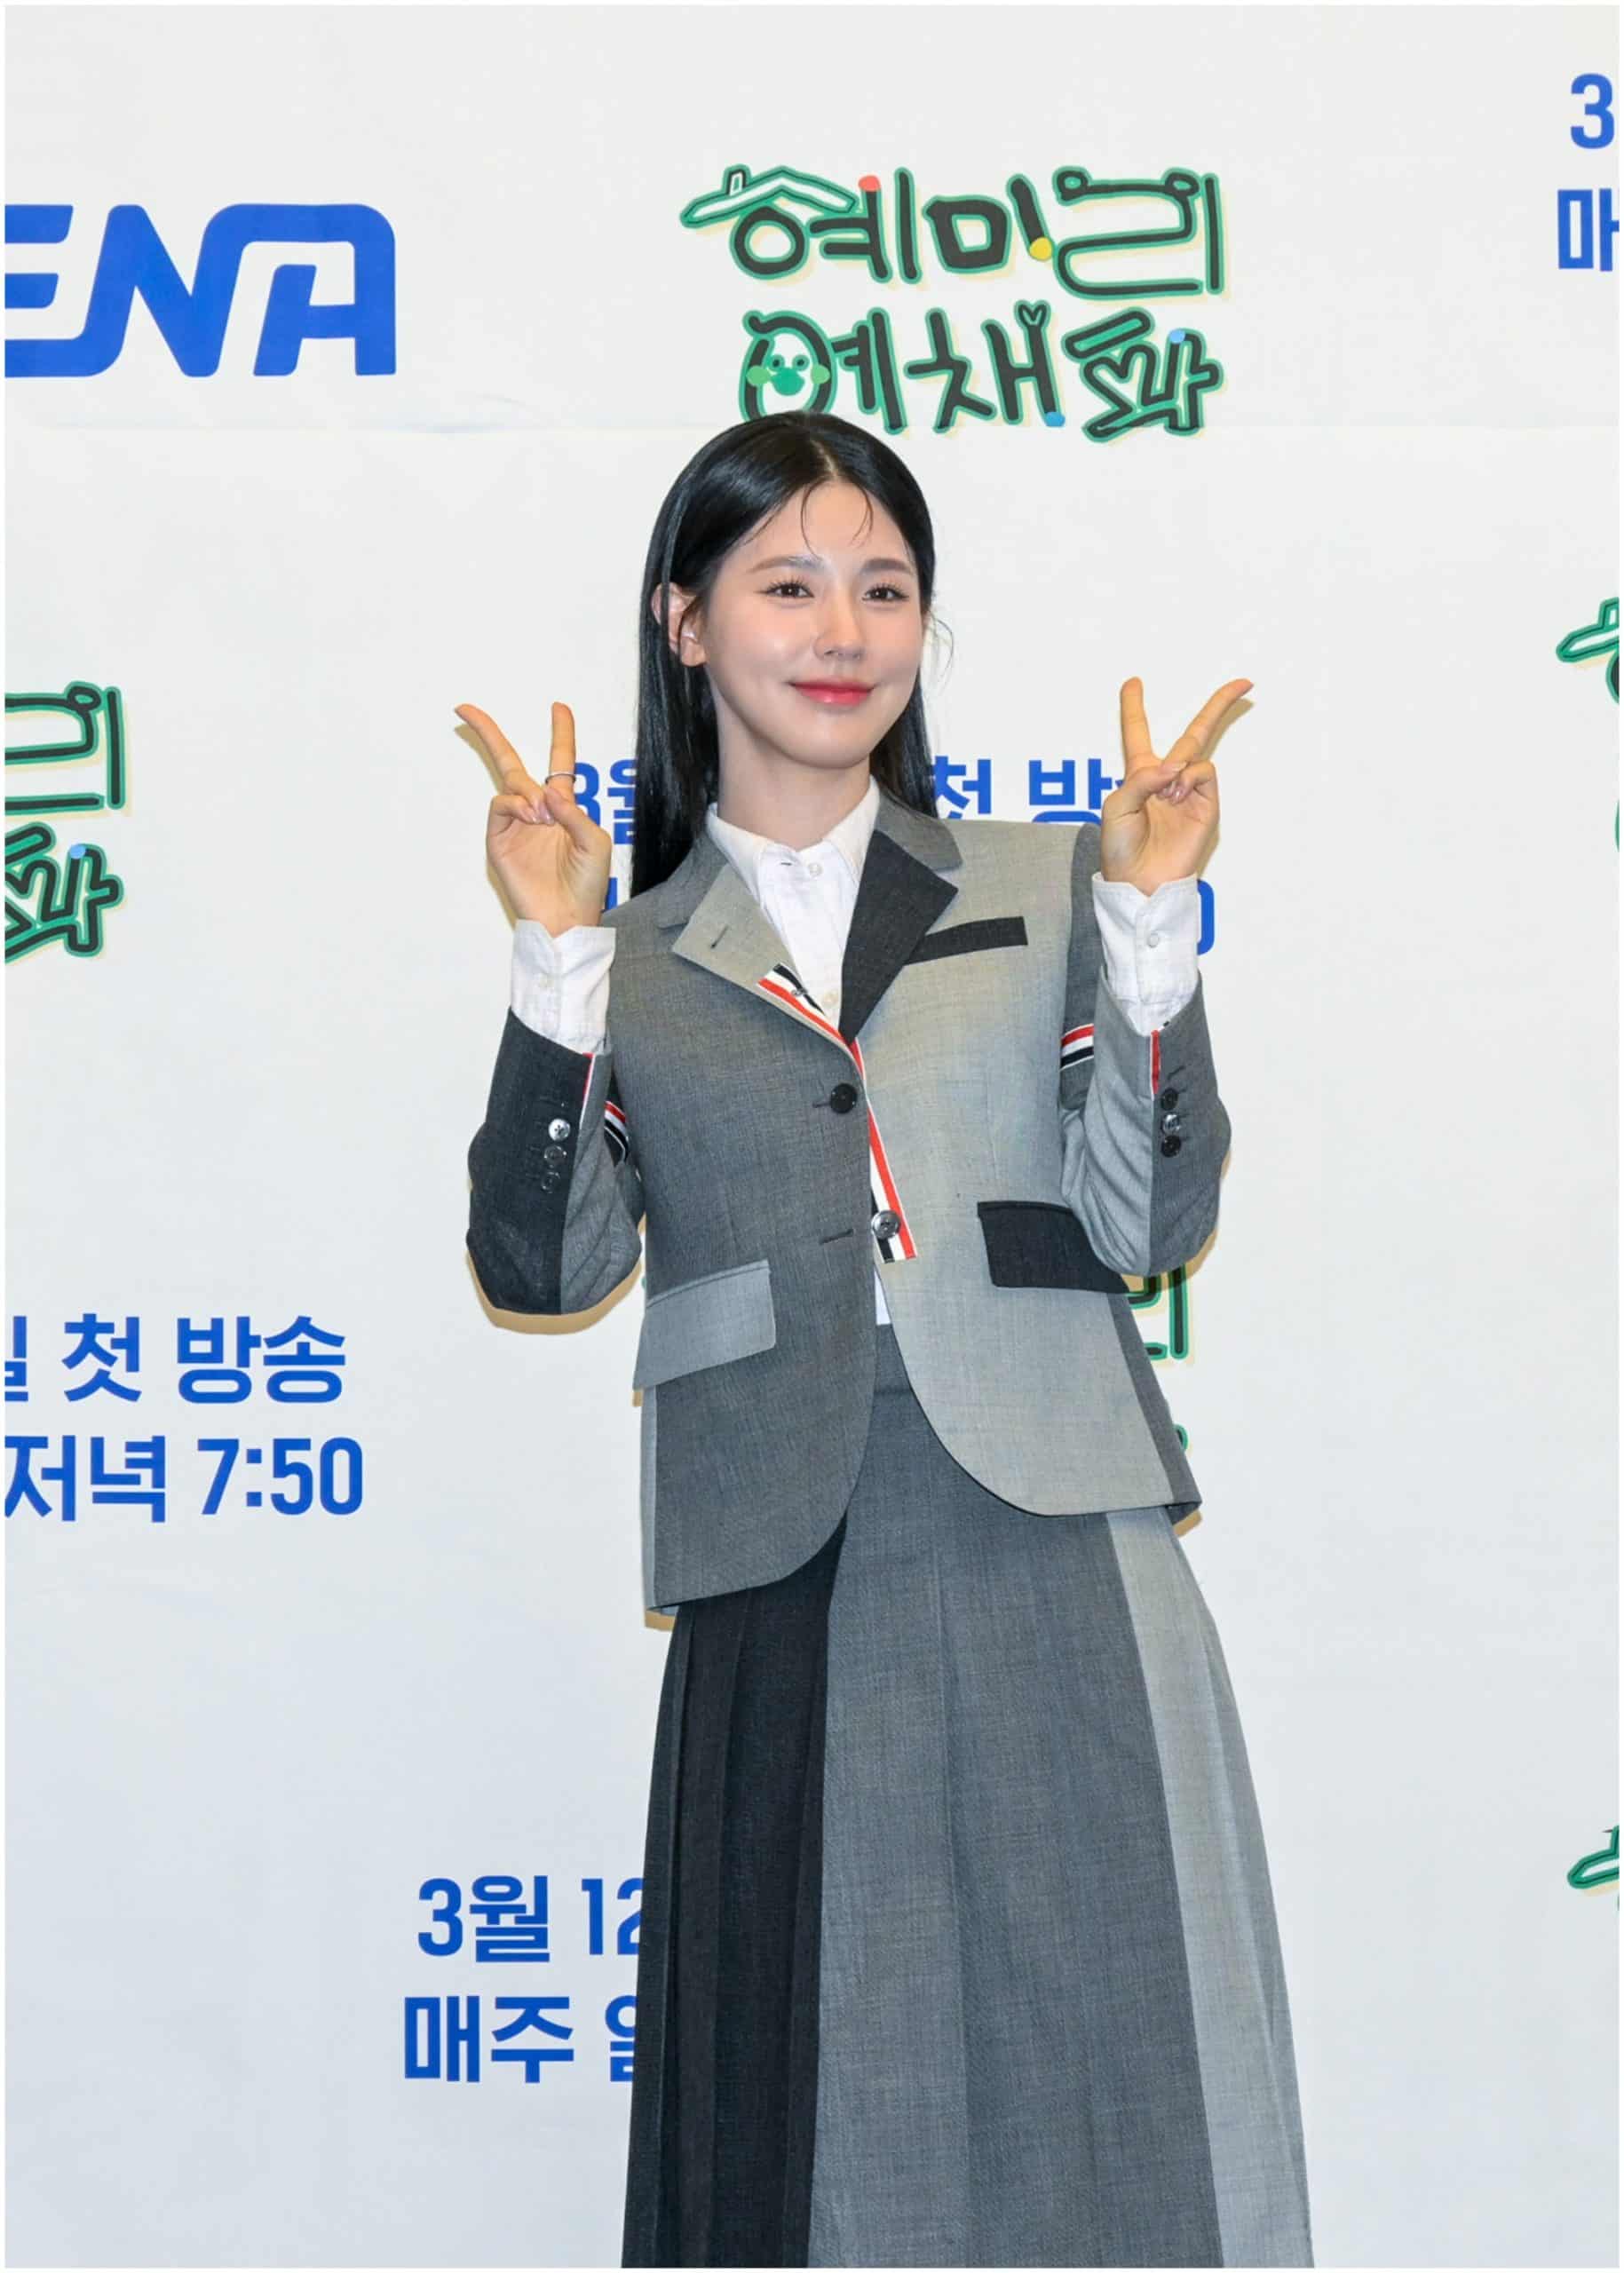 HMLYCP Korean Variety Show Episode 1 Cho Mi yeon